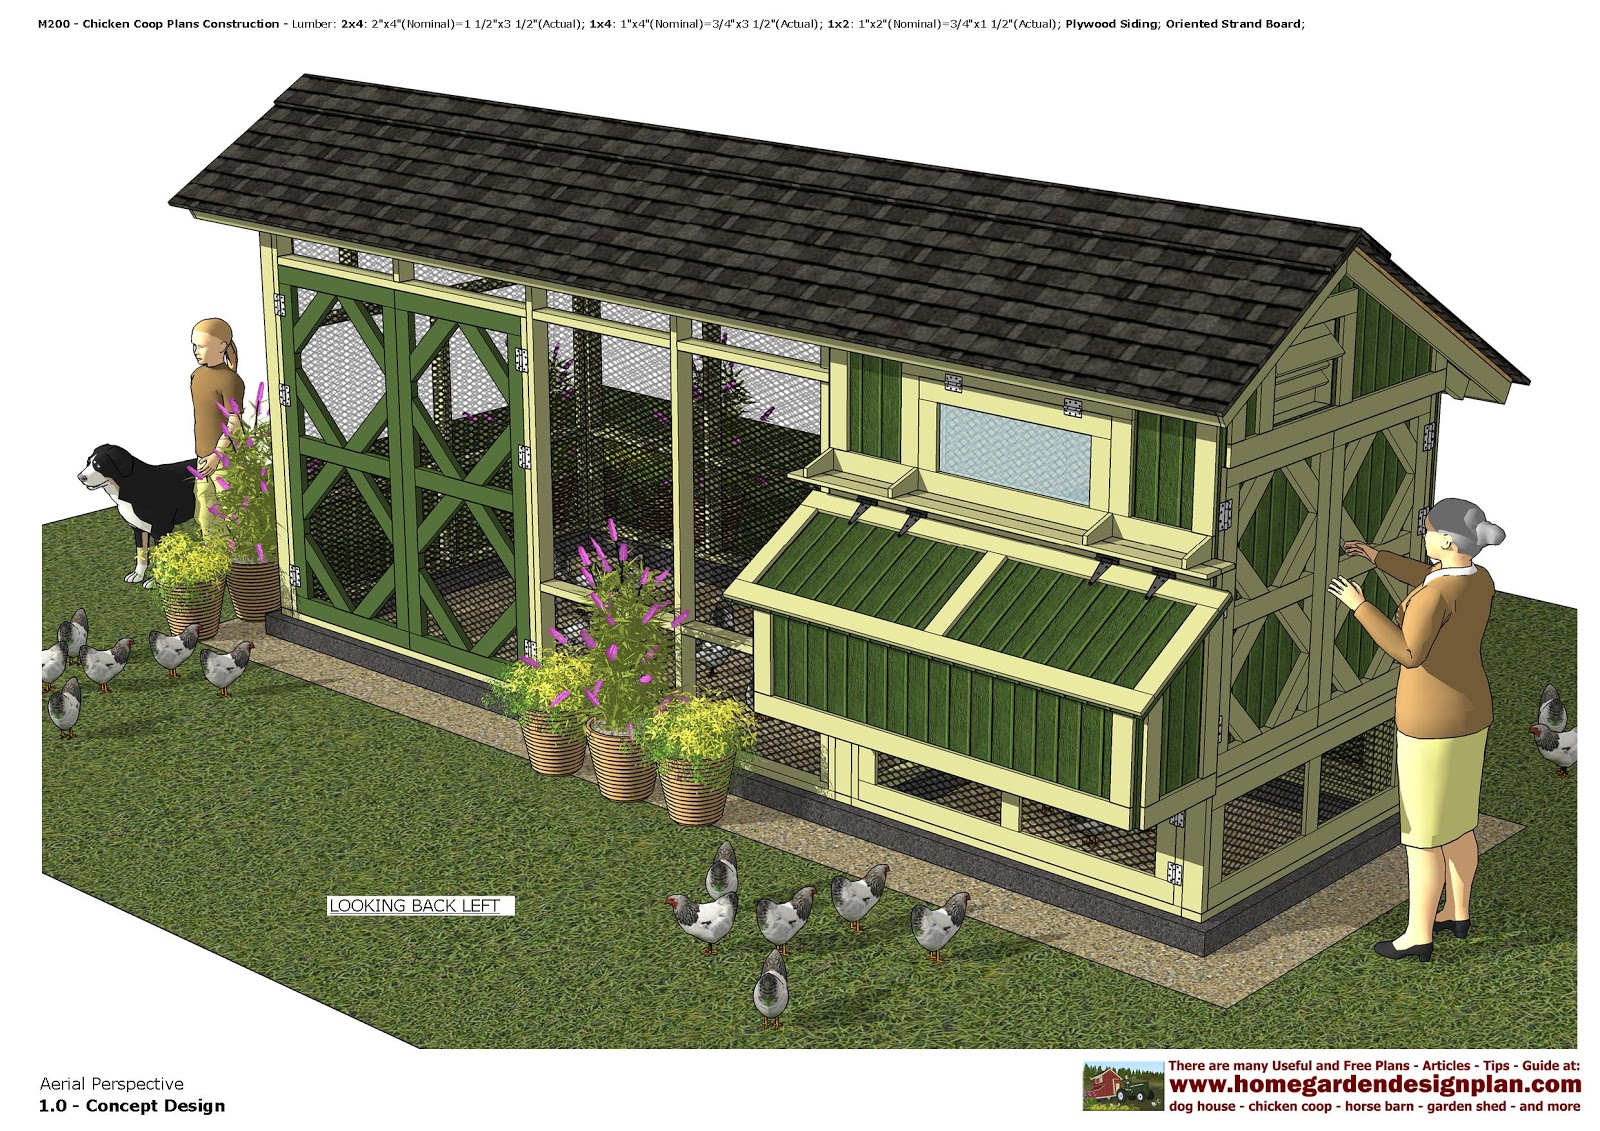 home garden plans: M200 - M200%2B %2BChicken%2BCoop%2BPlans%2BConstruction%2B %2B0720 02